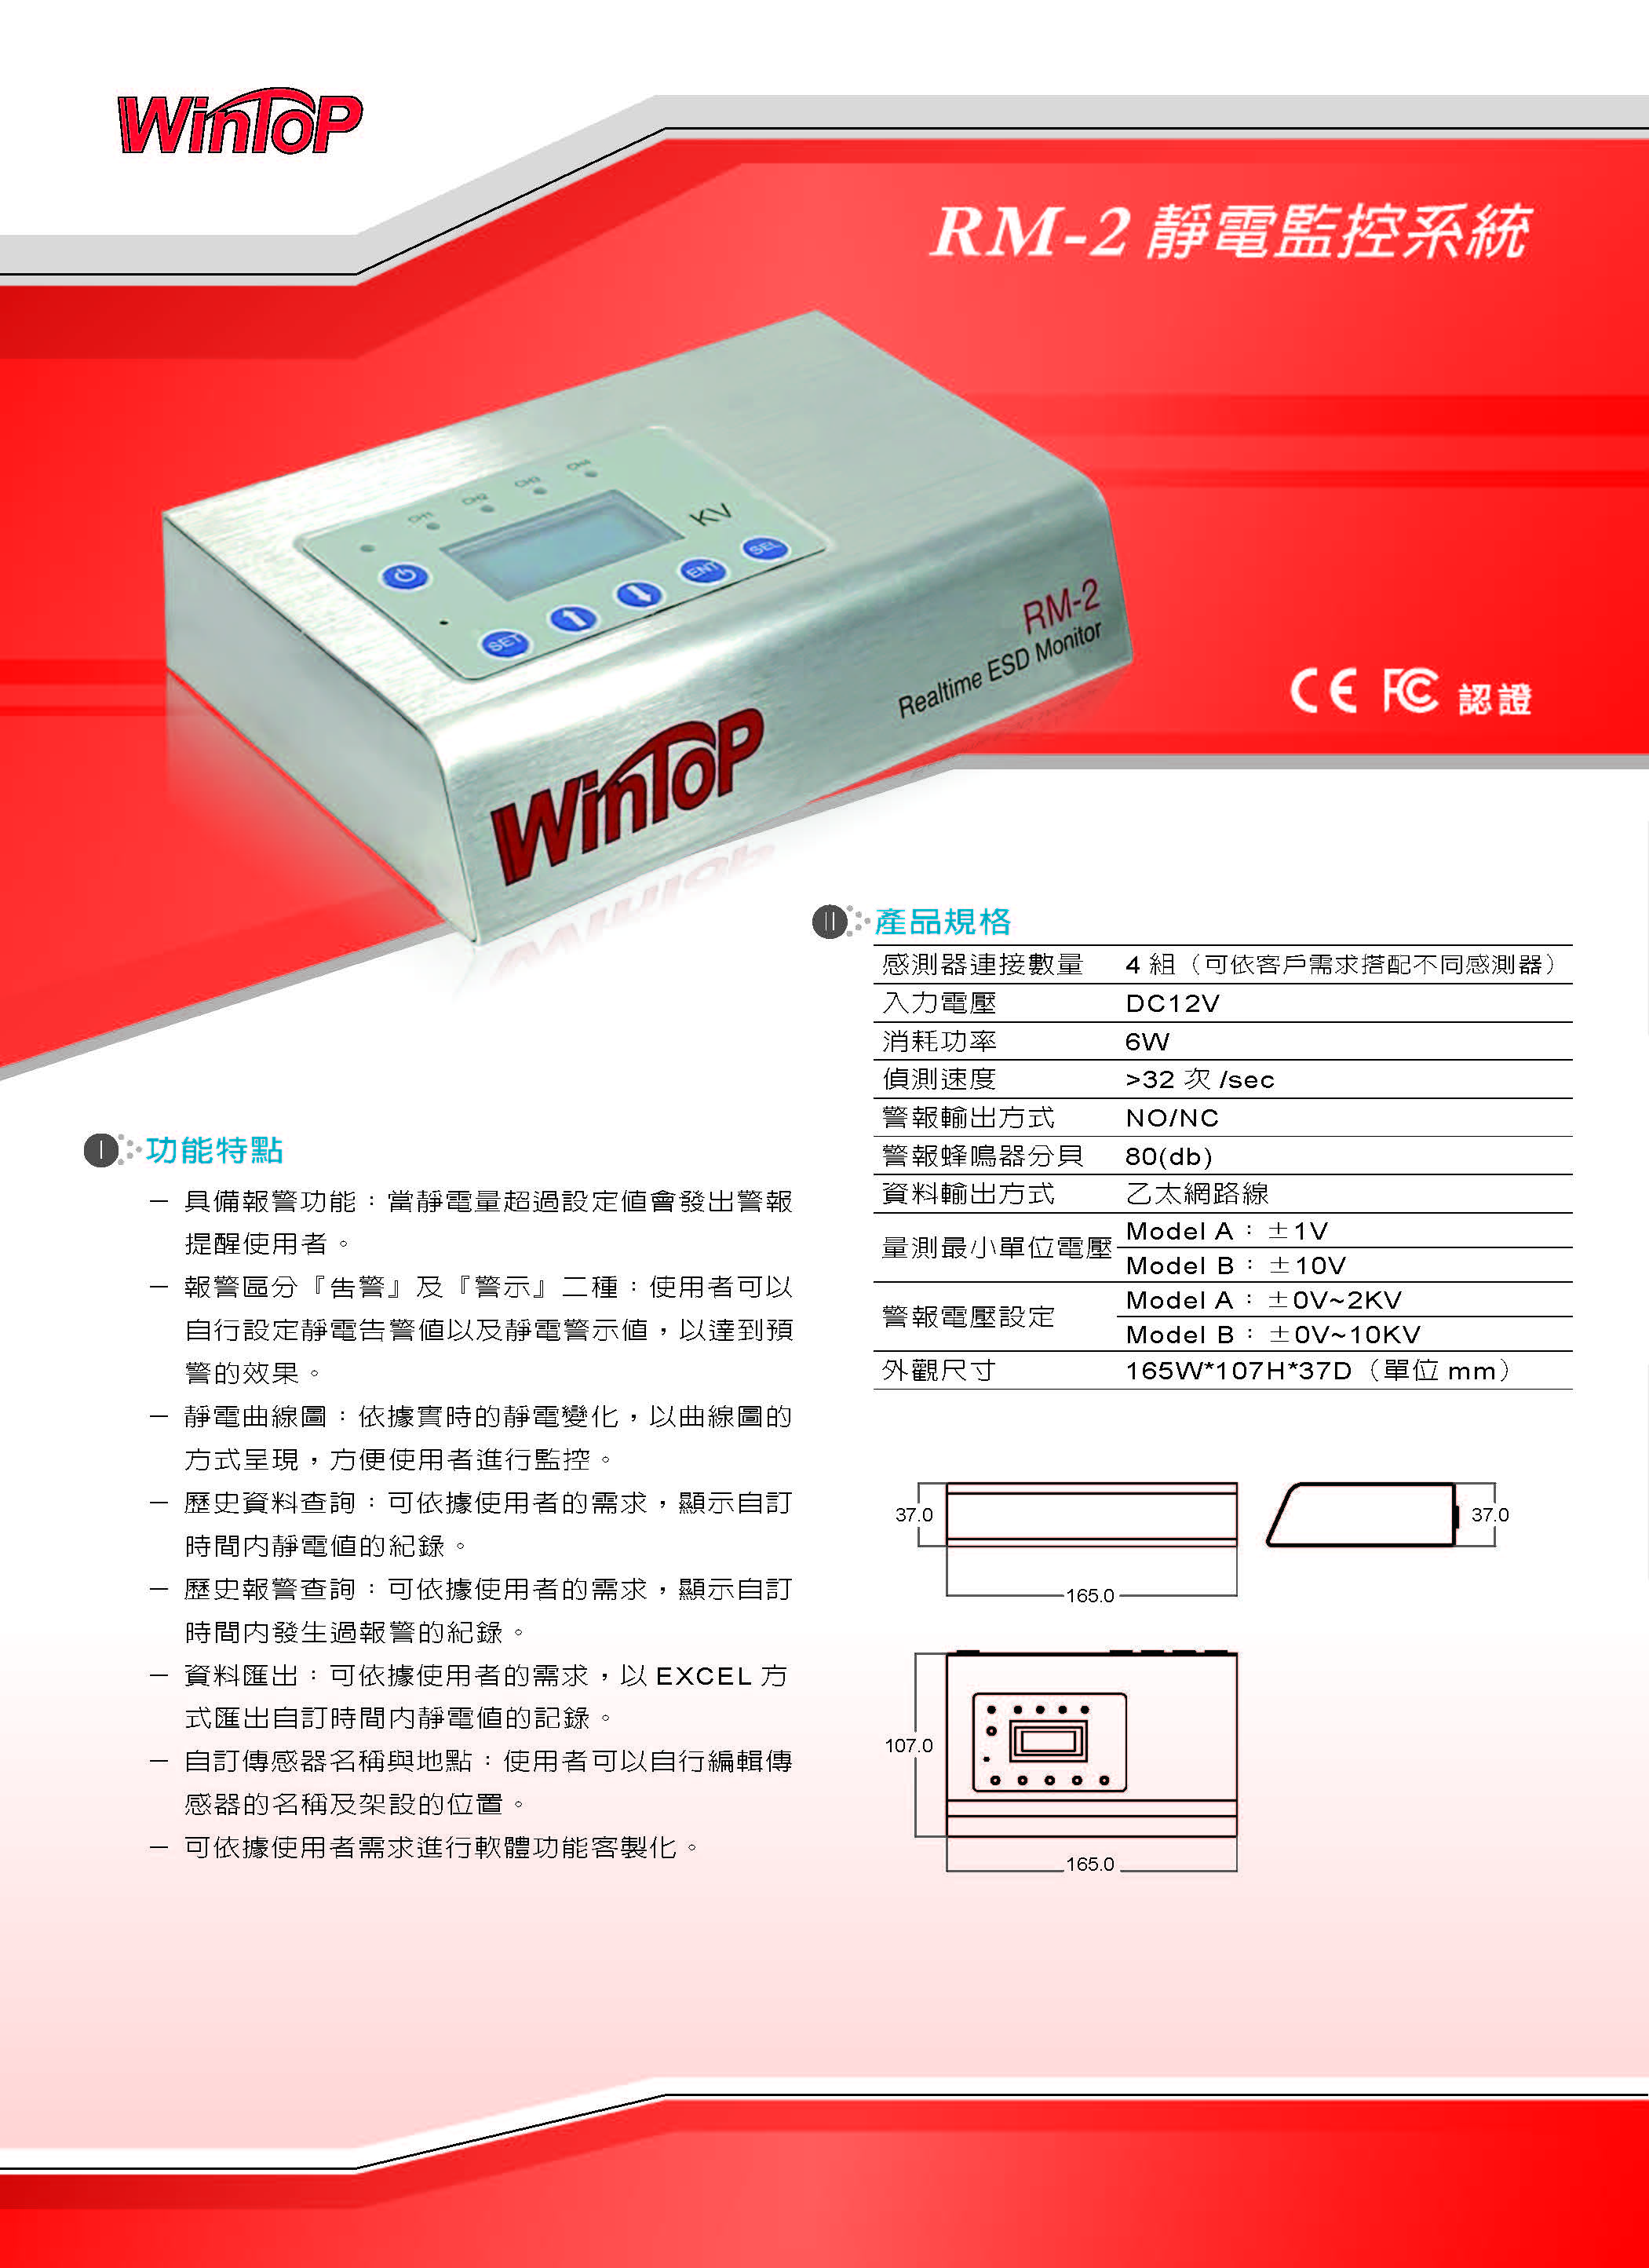 WINTOP RM-2